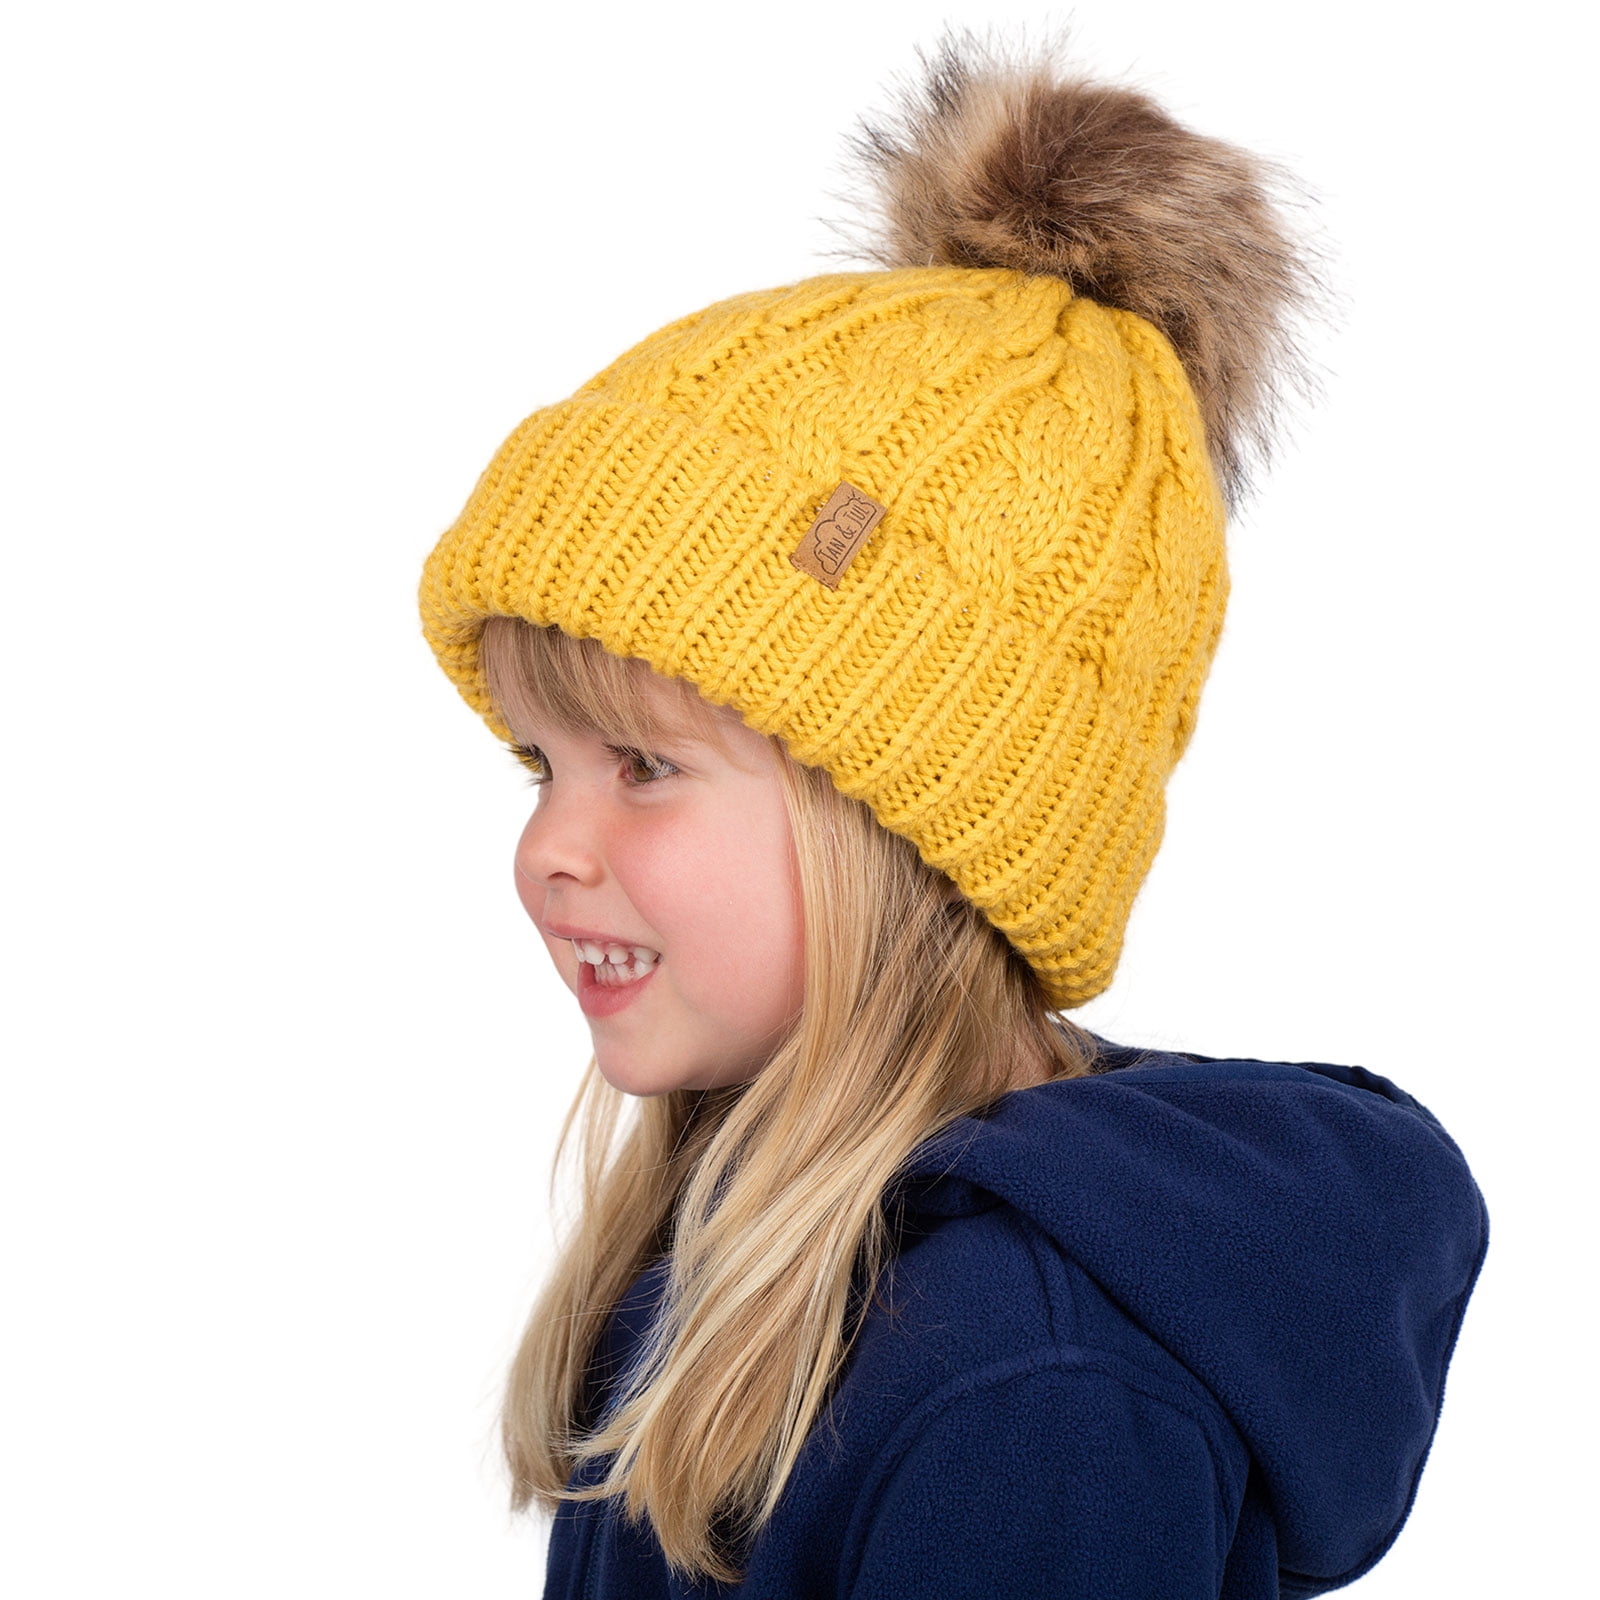 JAN & JUL Fleece Lined Knit Winter Hats for Baby Toddler Kids with Earflap